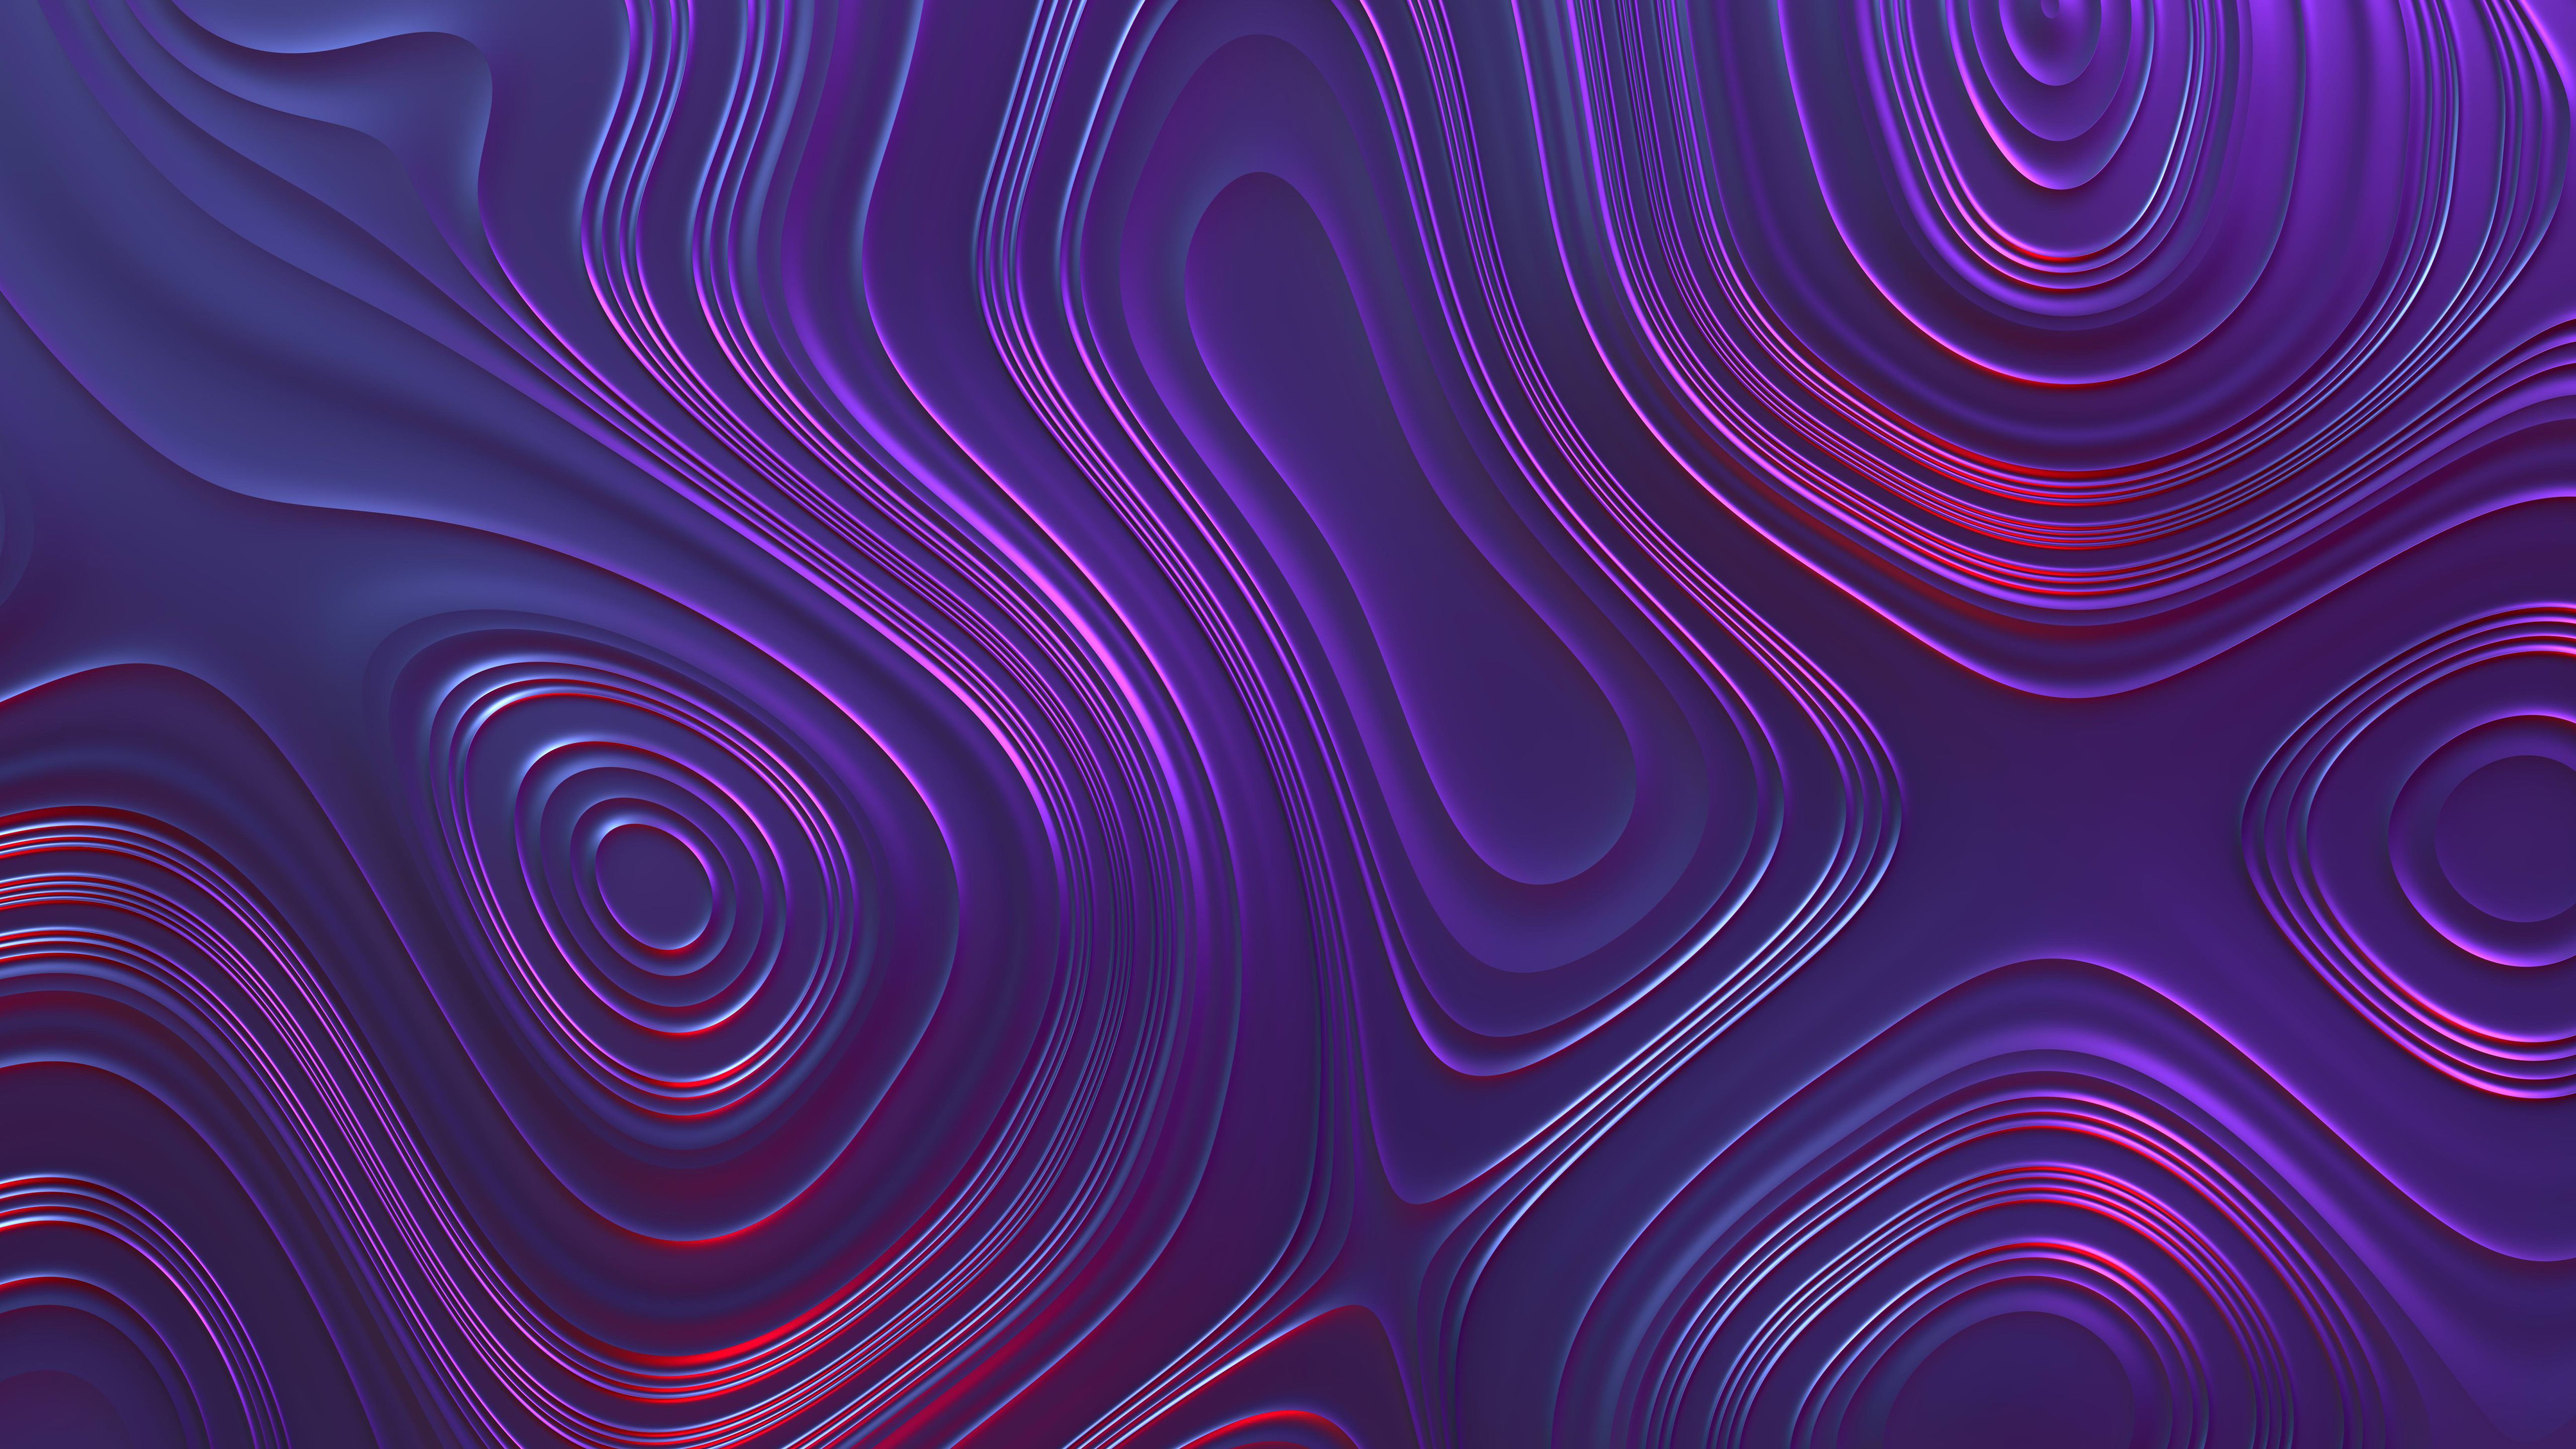 60 Great Purple Wallpapers For Your Desktop & Smartphone | Inspirationfeed